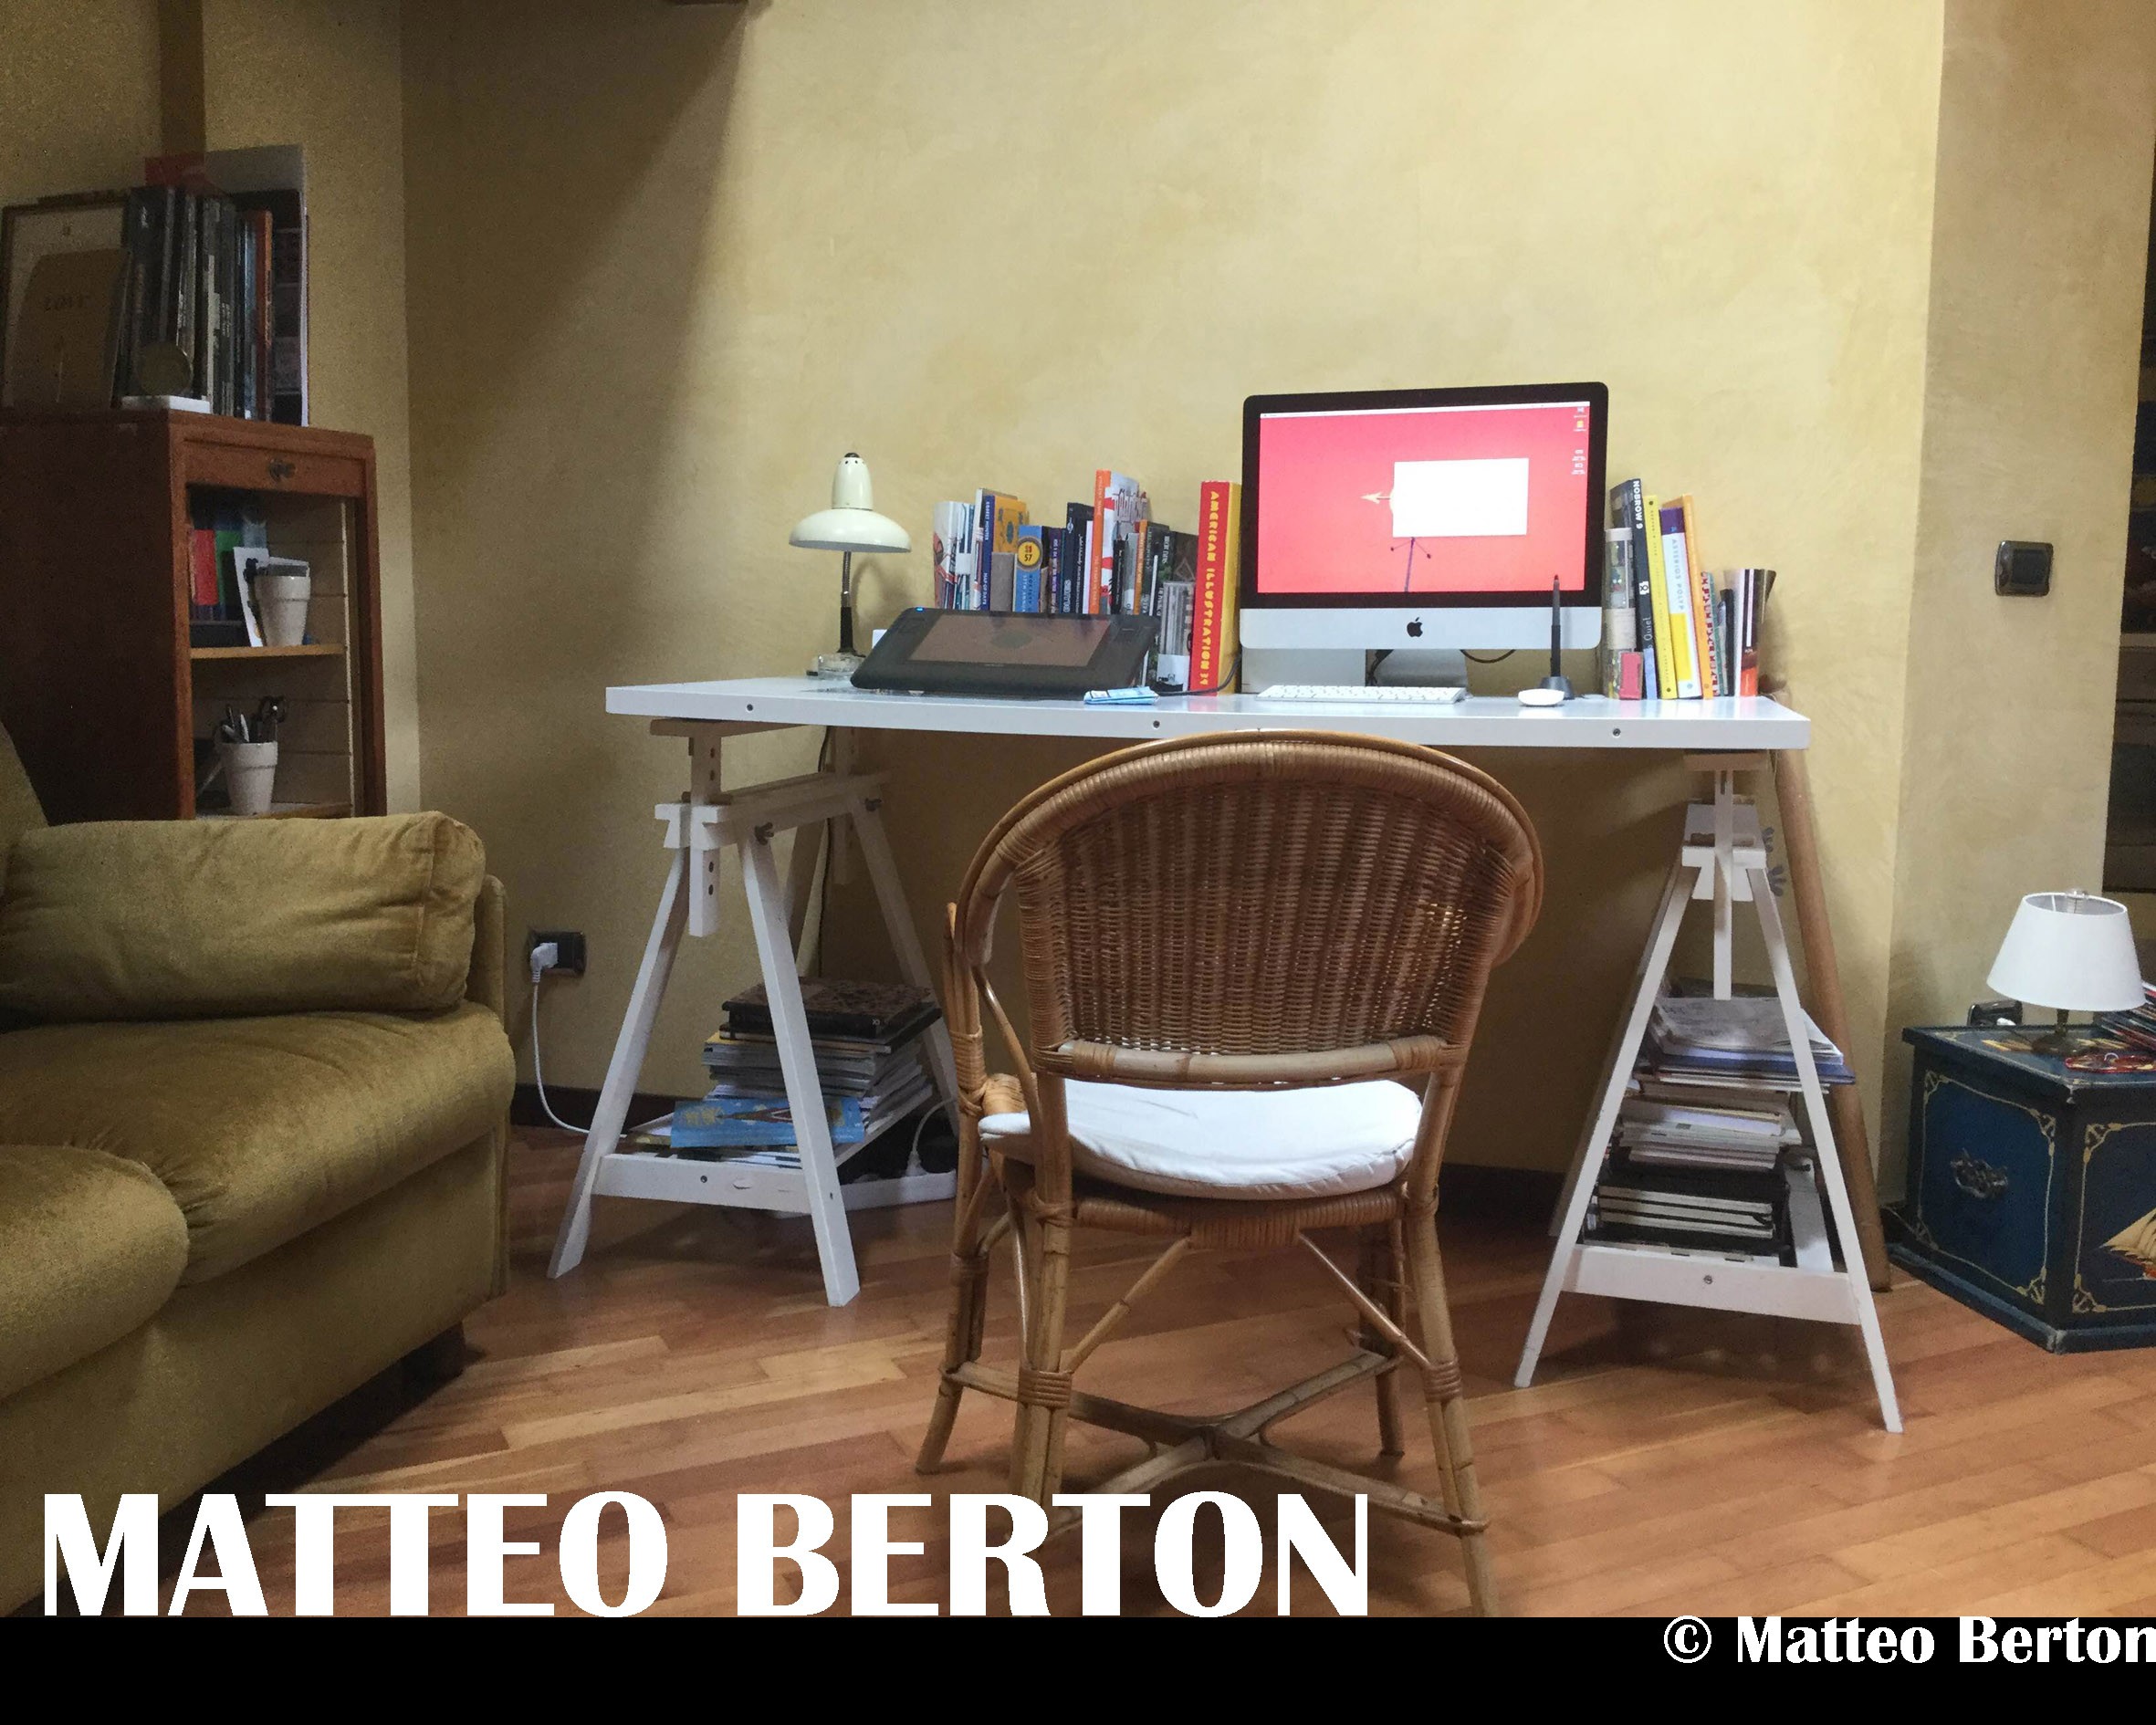 Matteo Berton